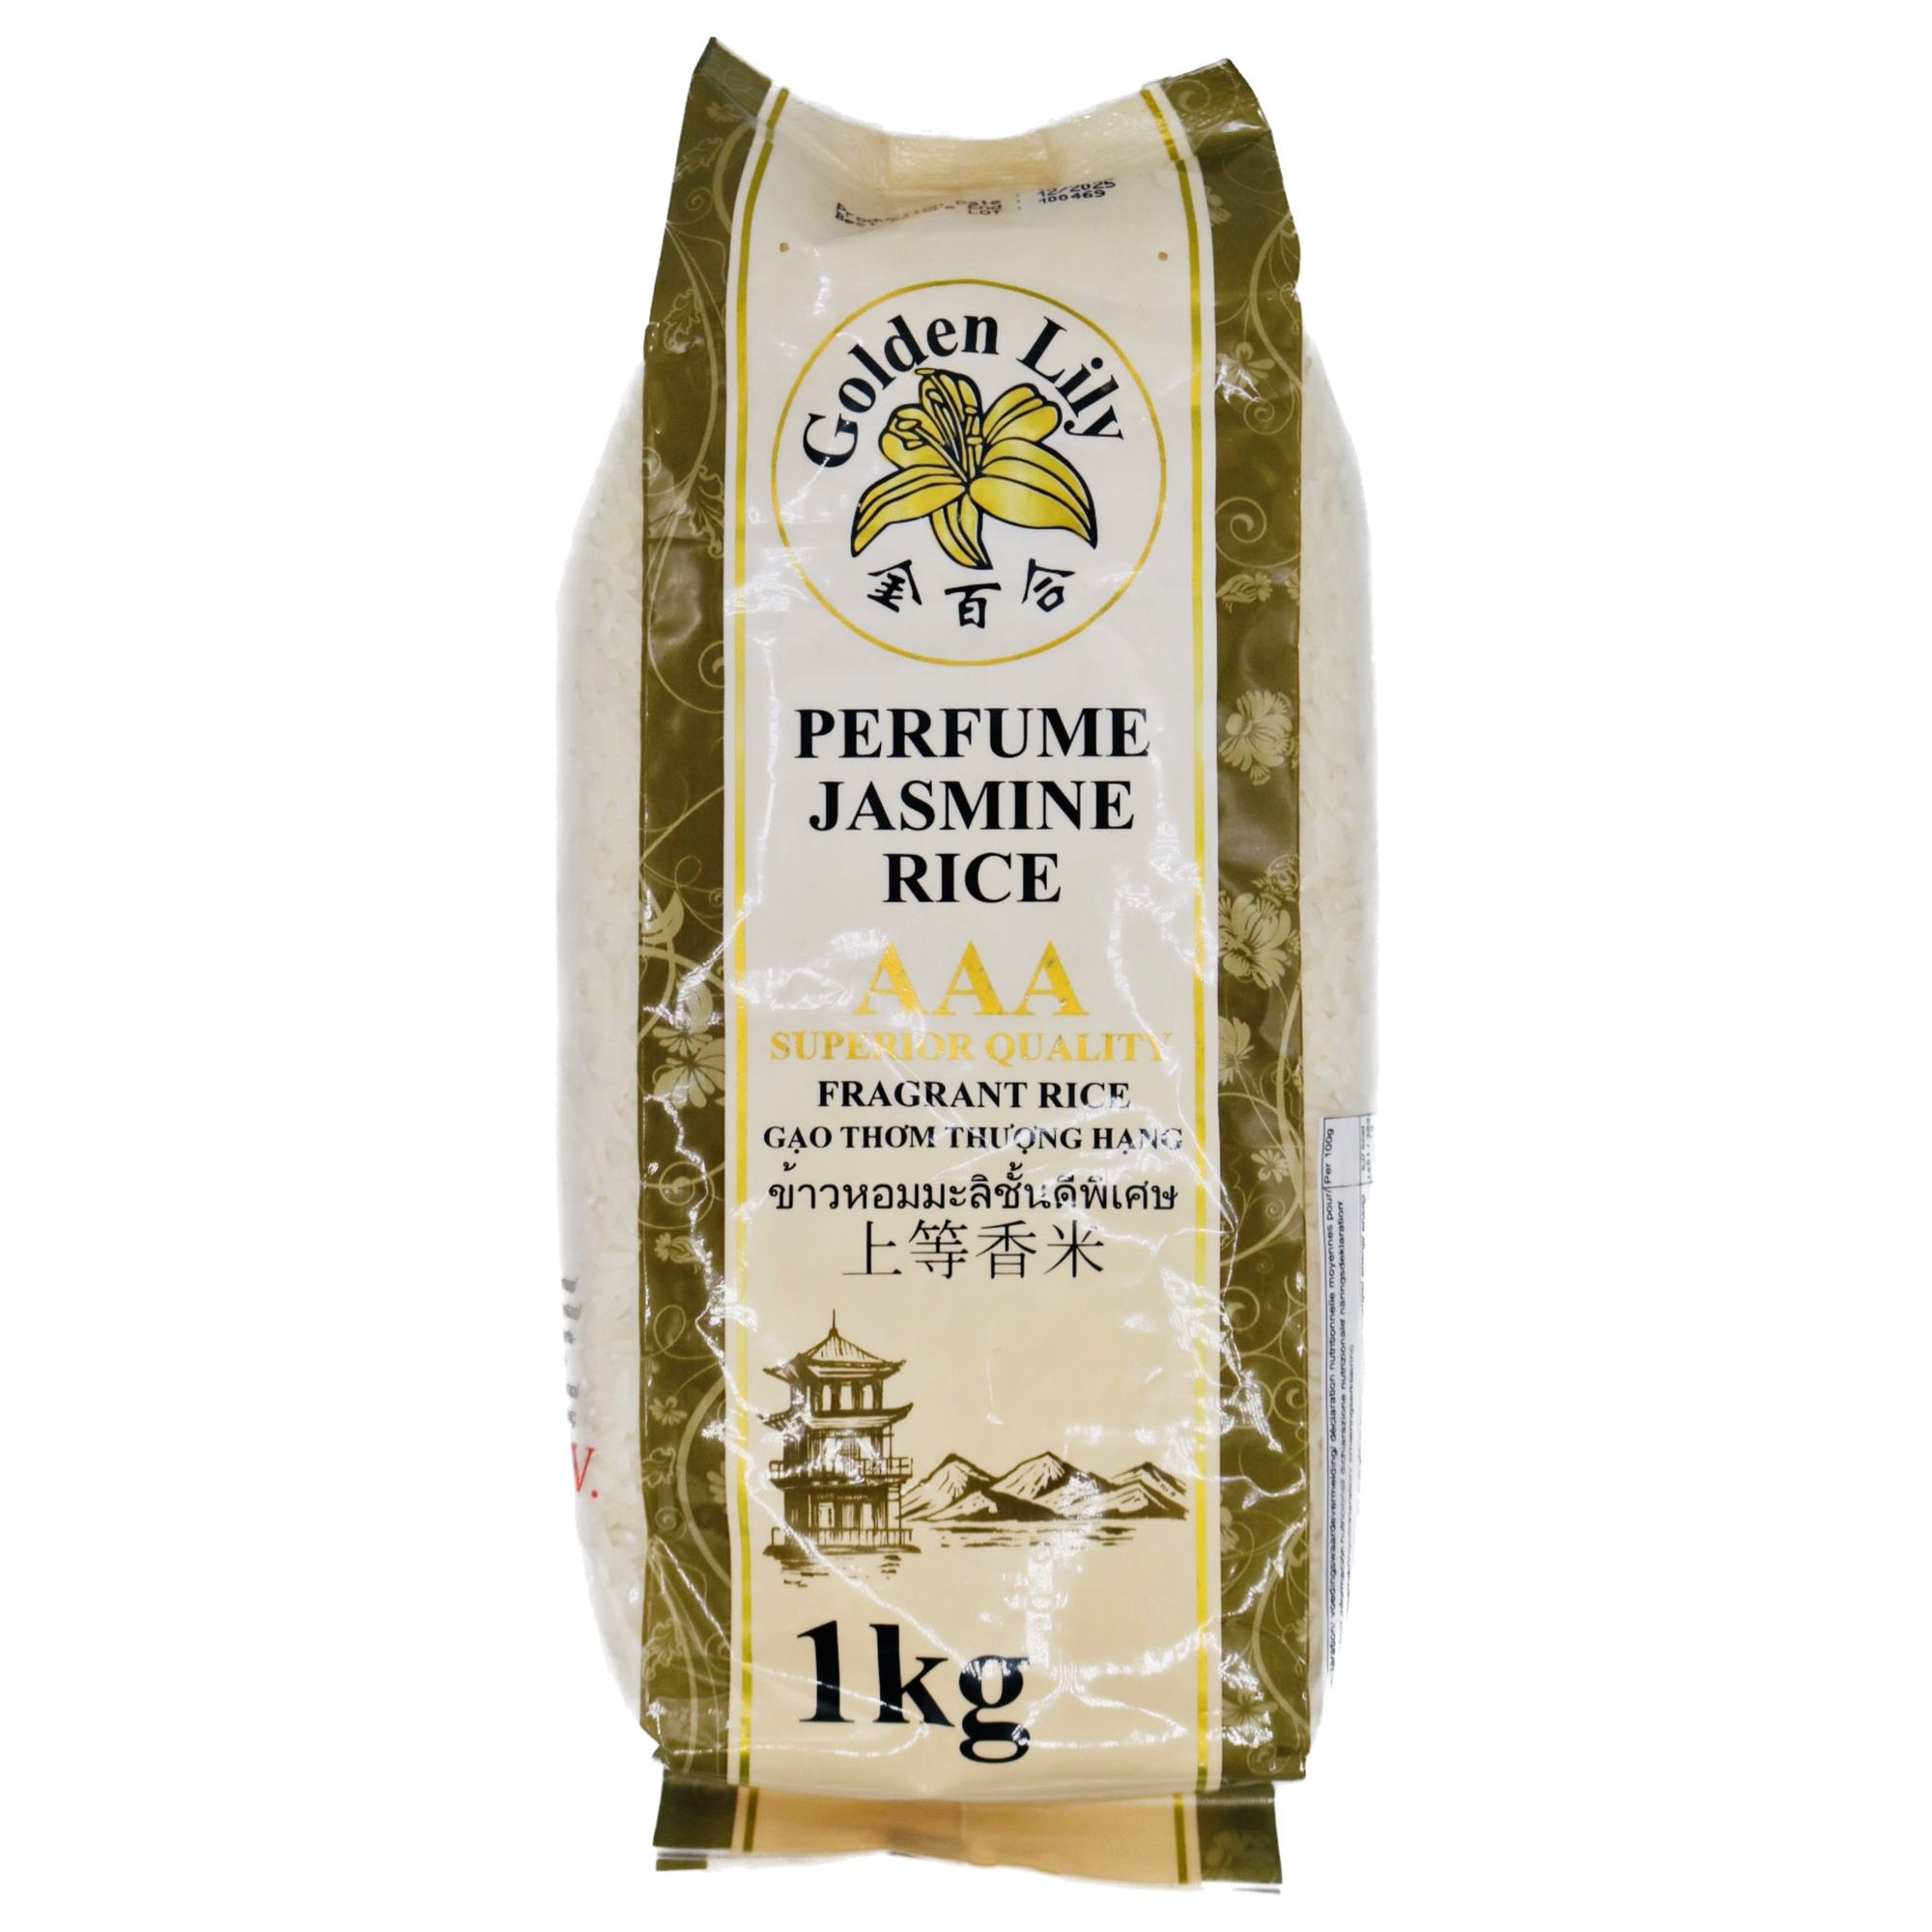 Golden Lily Perfume Jasmine Rice 1KG